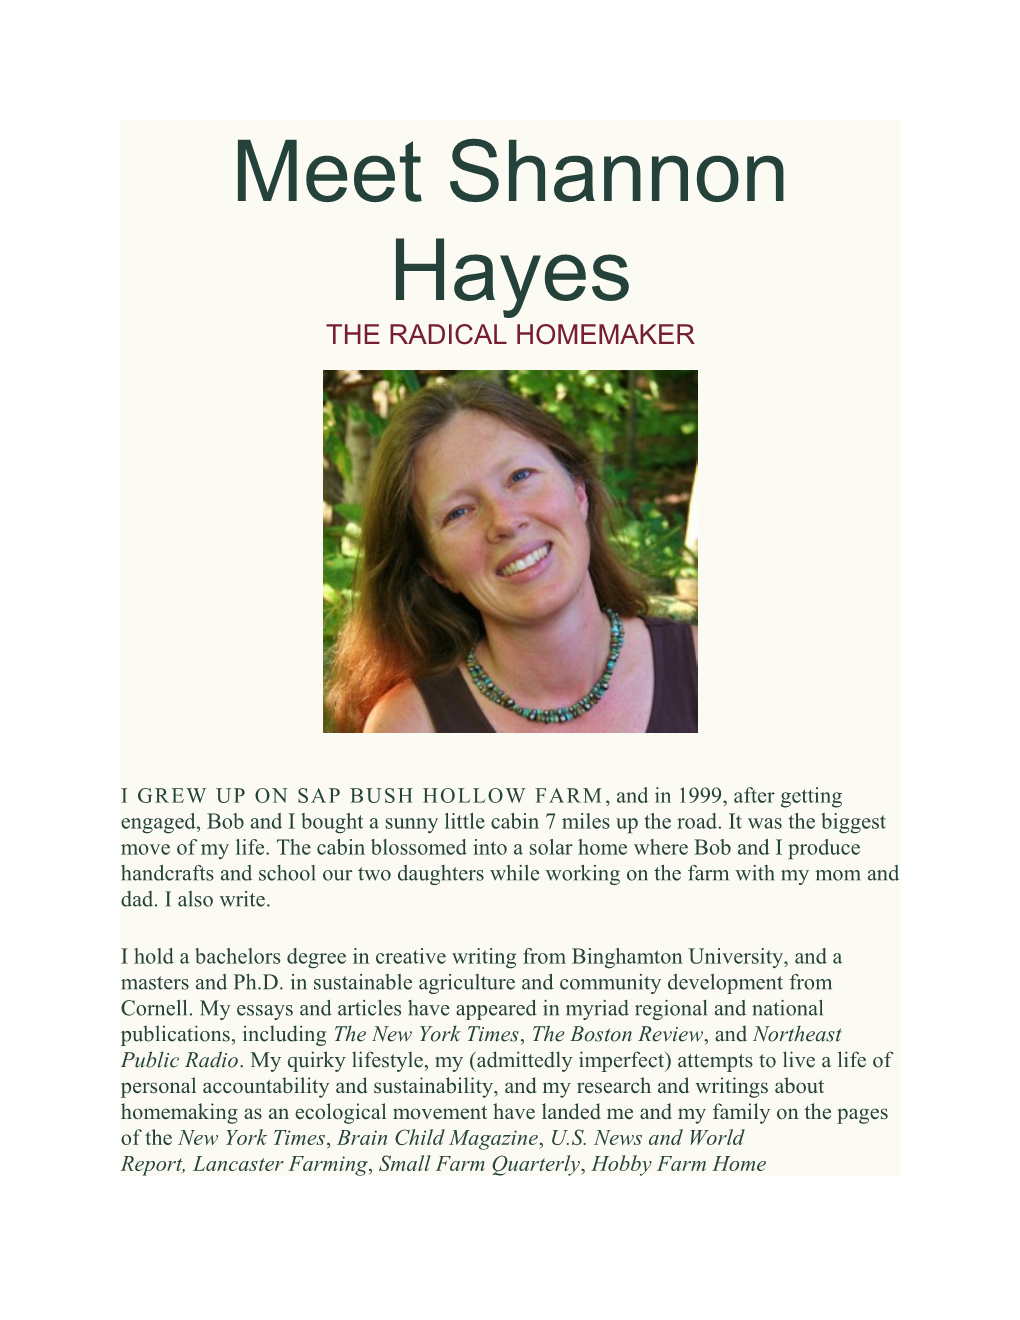 Meet Shannon Hayes